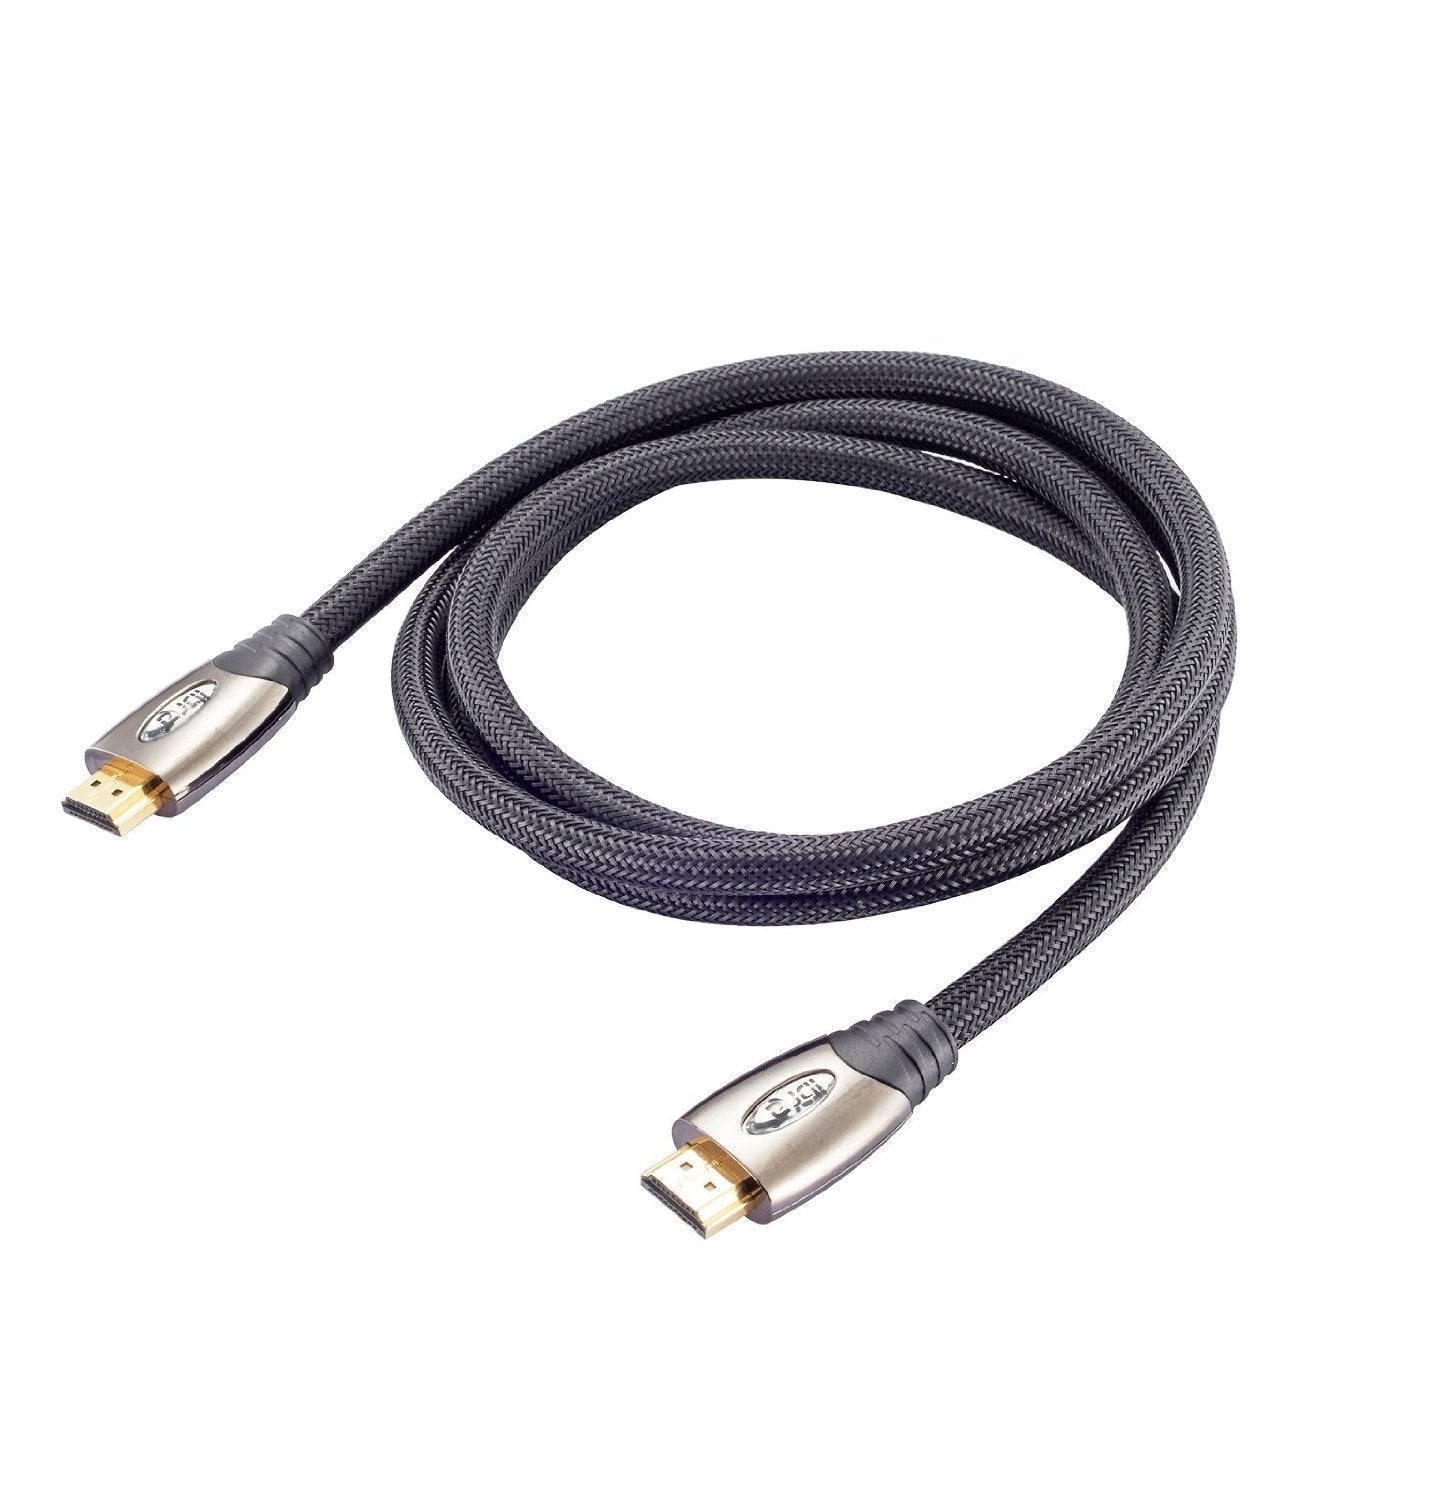 High Speed HDMI Cable v2.0/1.4a 18Gbps 3D TV 2160p PS4 SKY HD 4K@60Hz Ultra HD Ethernet Audio Return Virgin BT Gold Connectors Nylon Braided - 7M - IBRA PLATINUM